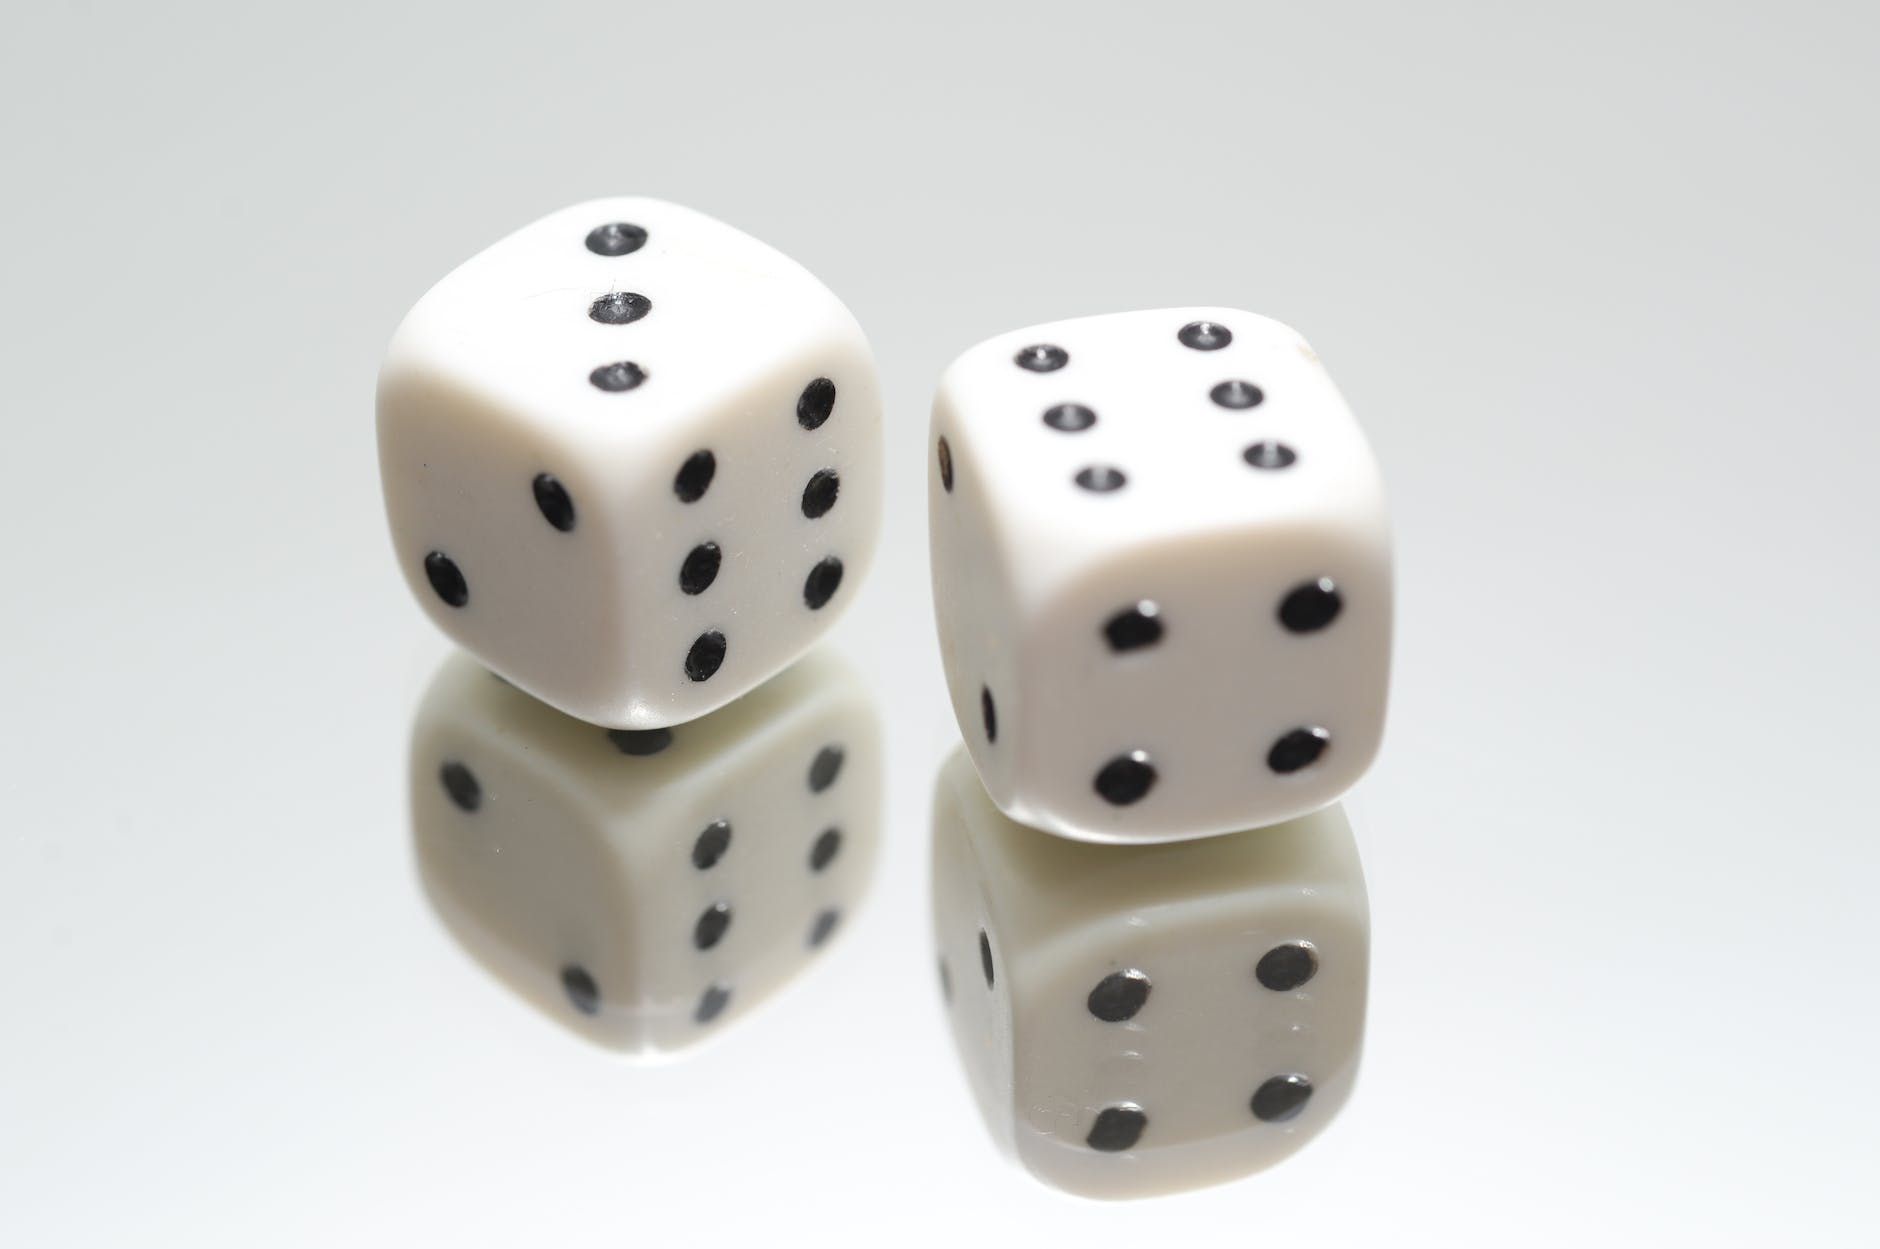 common dice games